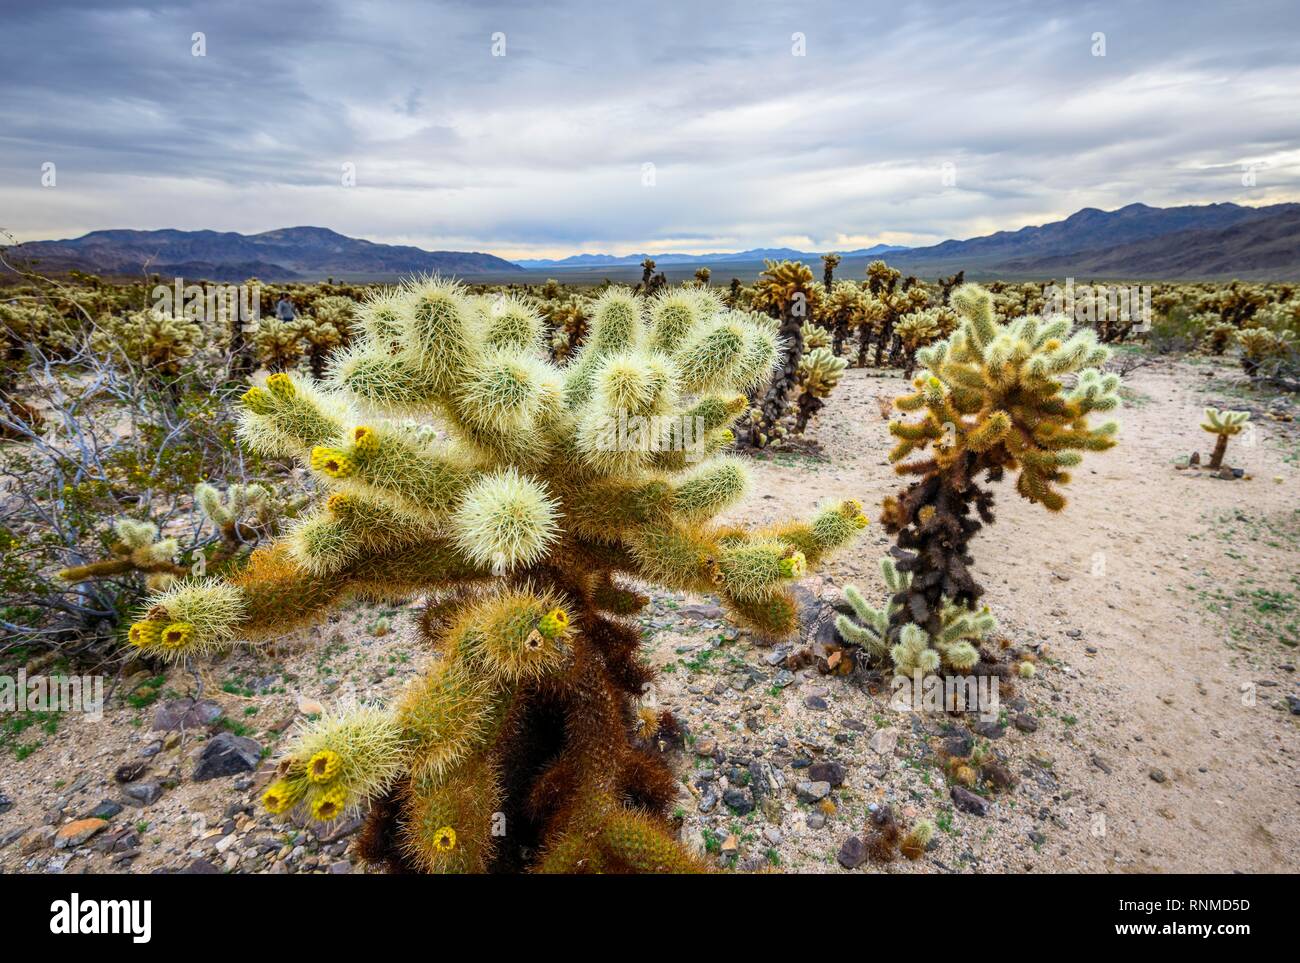 Teddybär Kaktus Stockfotos und -bilder Kaufen - Alamy